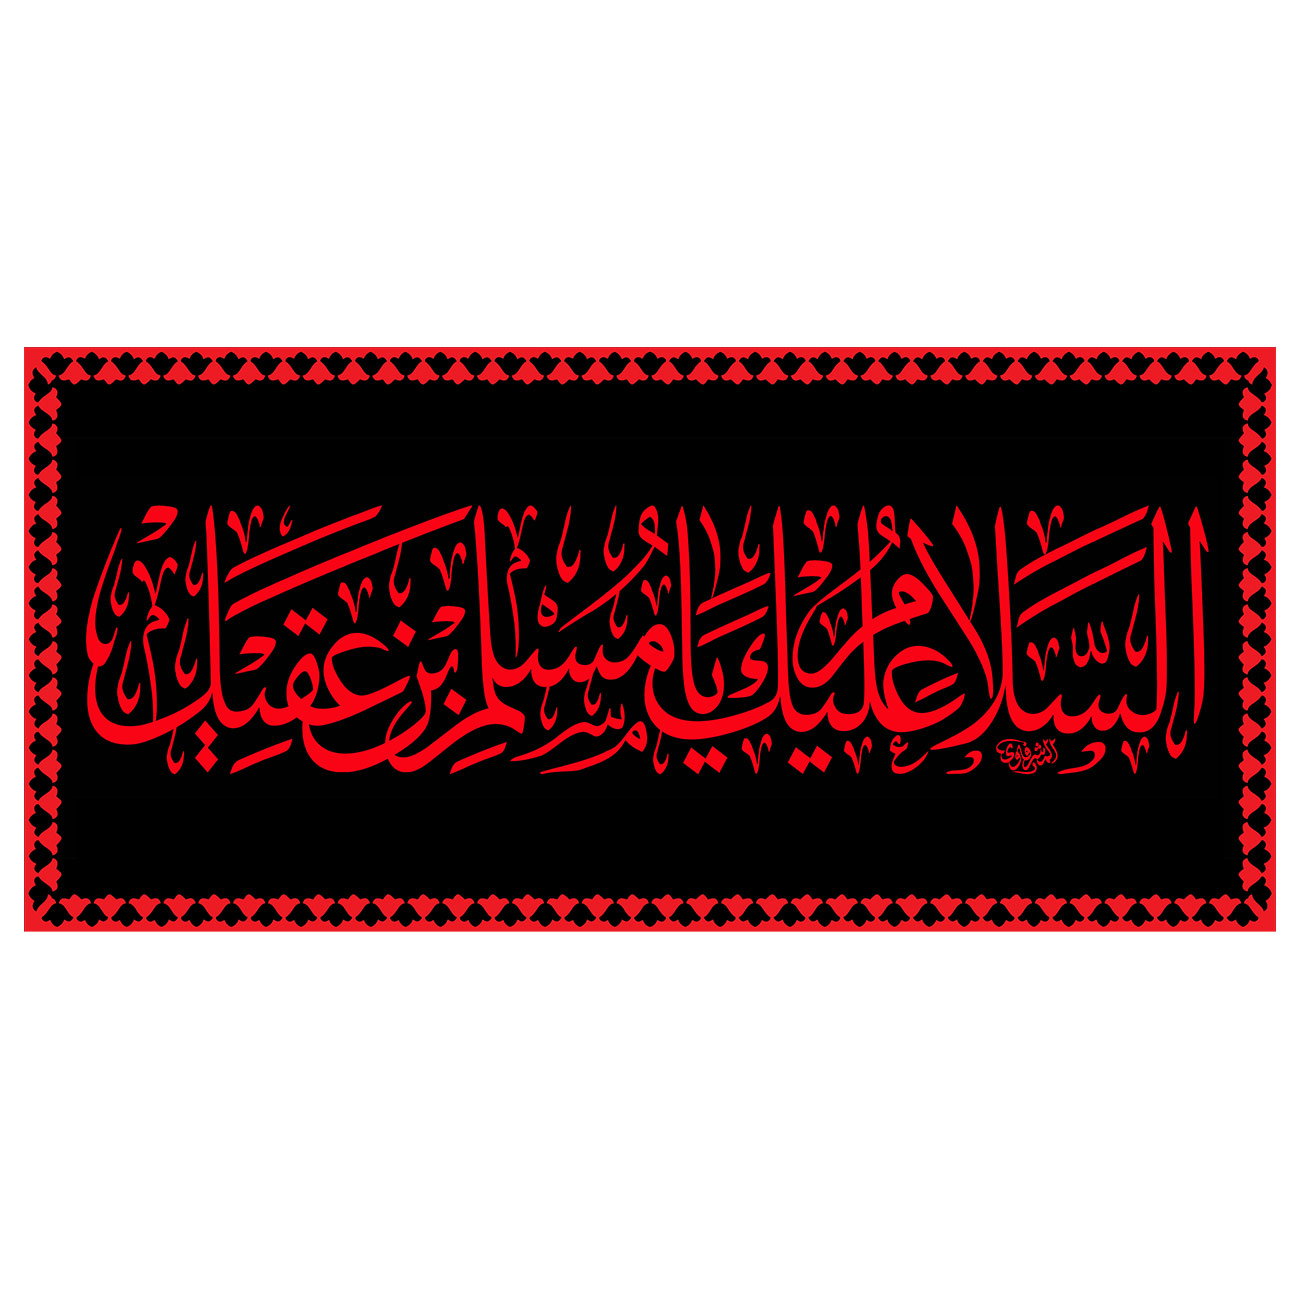  پرچم طرح نوشته مدل اسلام علیک یا مسلم بن عقیل کد 2281